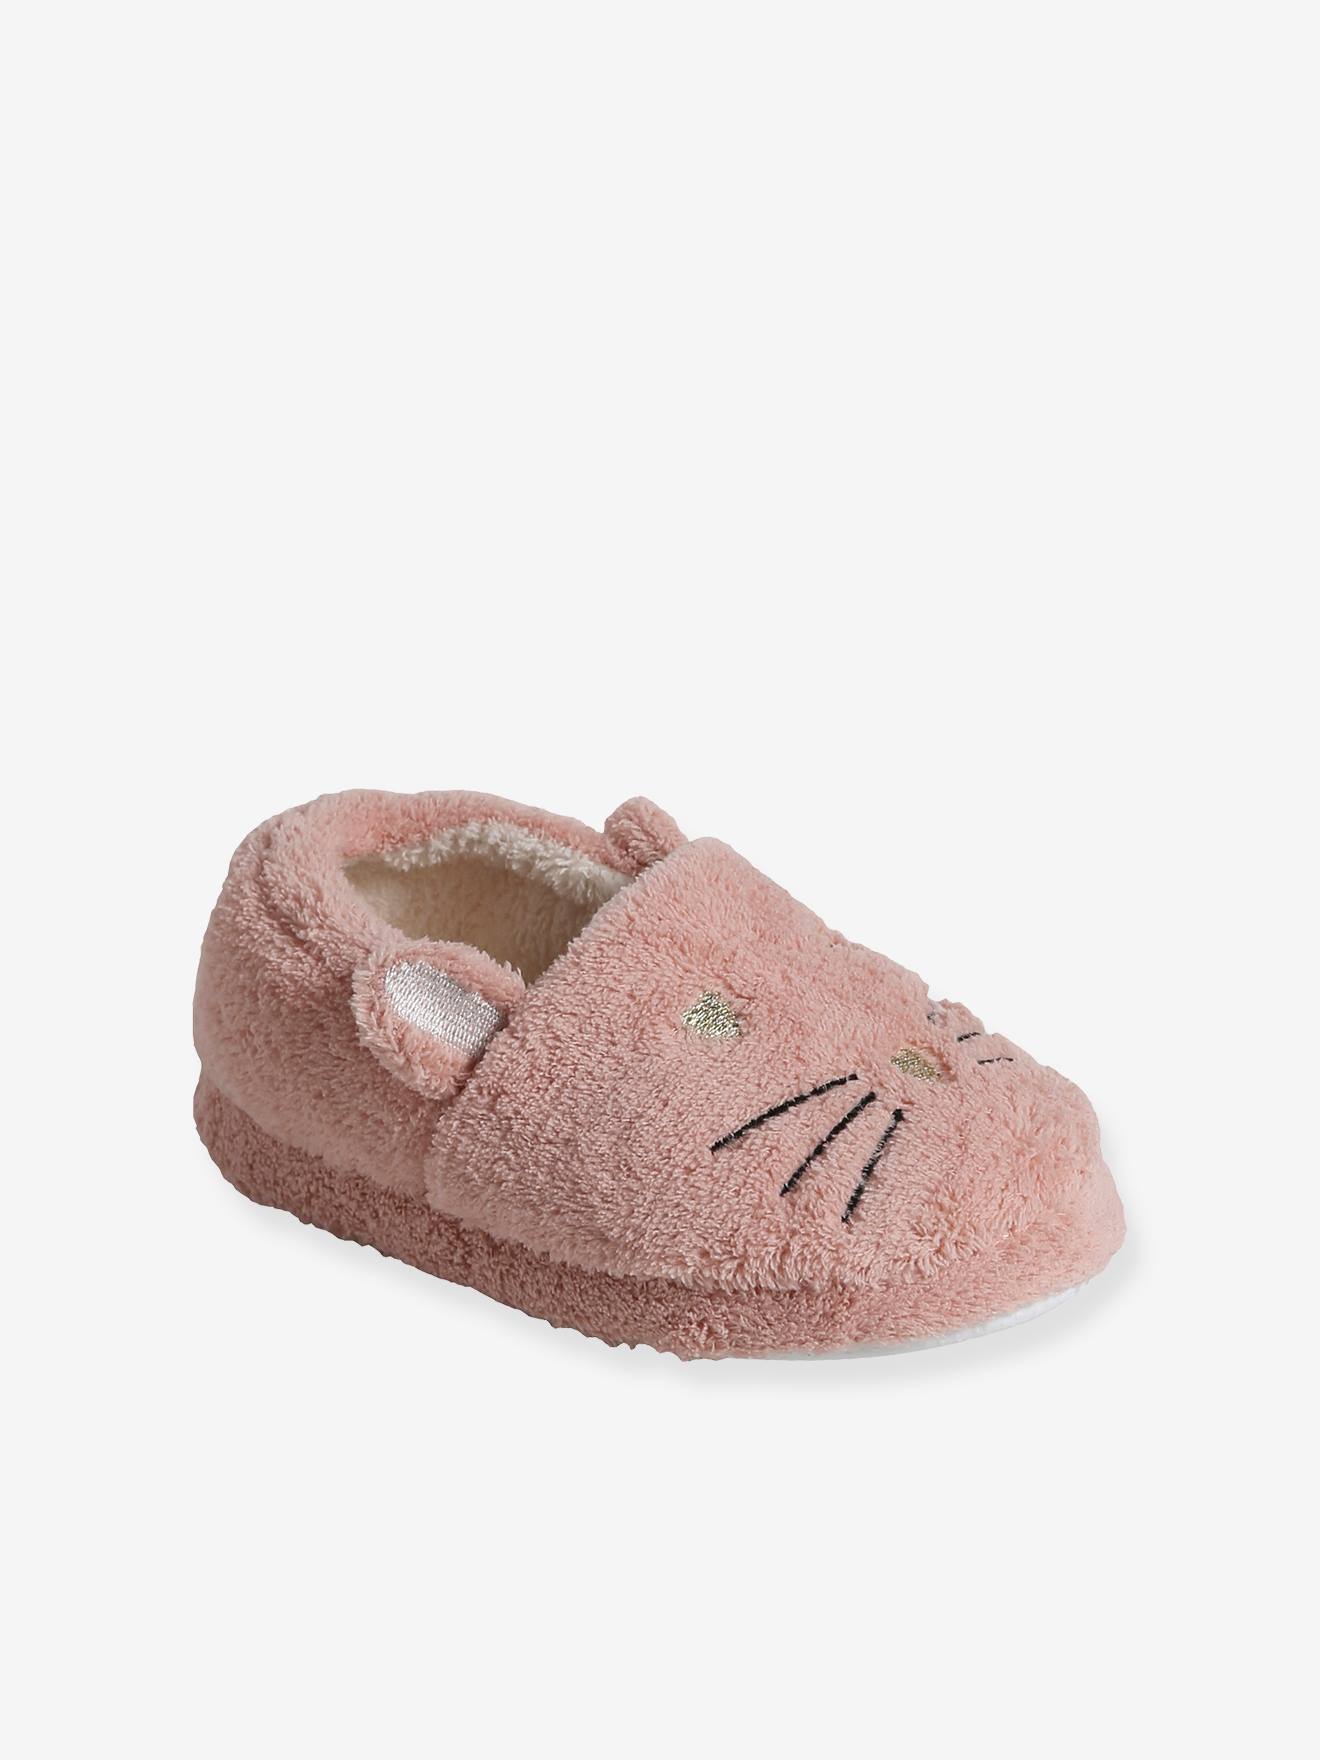 VERTBAUDET Zapatillas de casa estilo peluche infantiles gato rosa